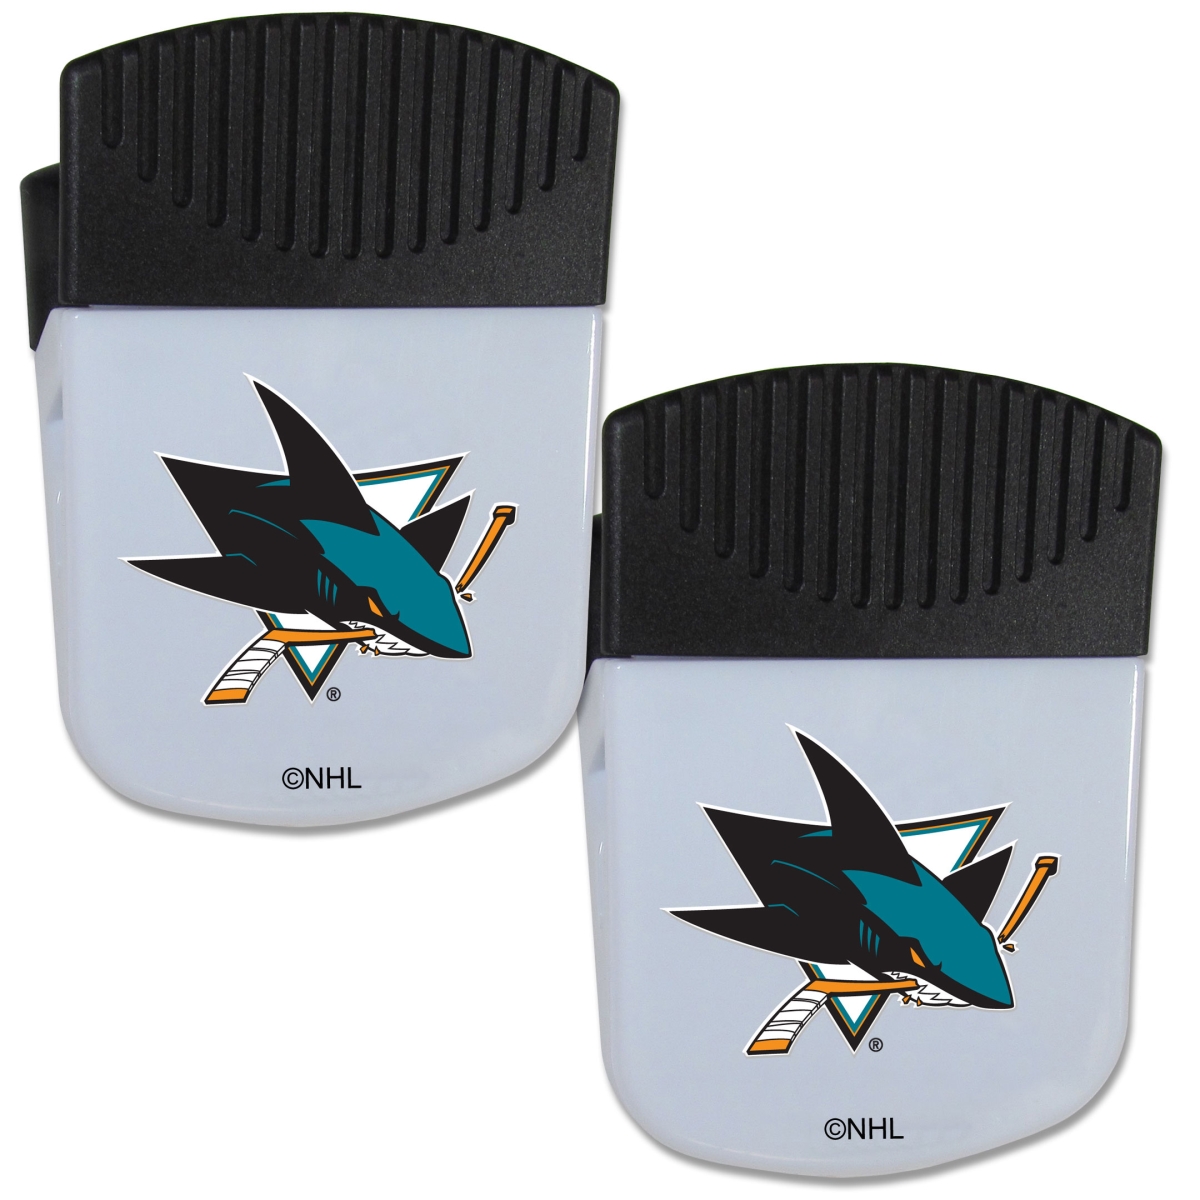 Picture of Siskiyou 2HPMC115 Unisex NHL San Jose Sharks Chip Clip Magnet with Bottle Opener - Pack of 2